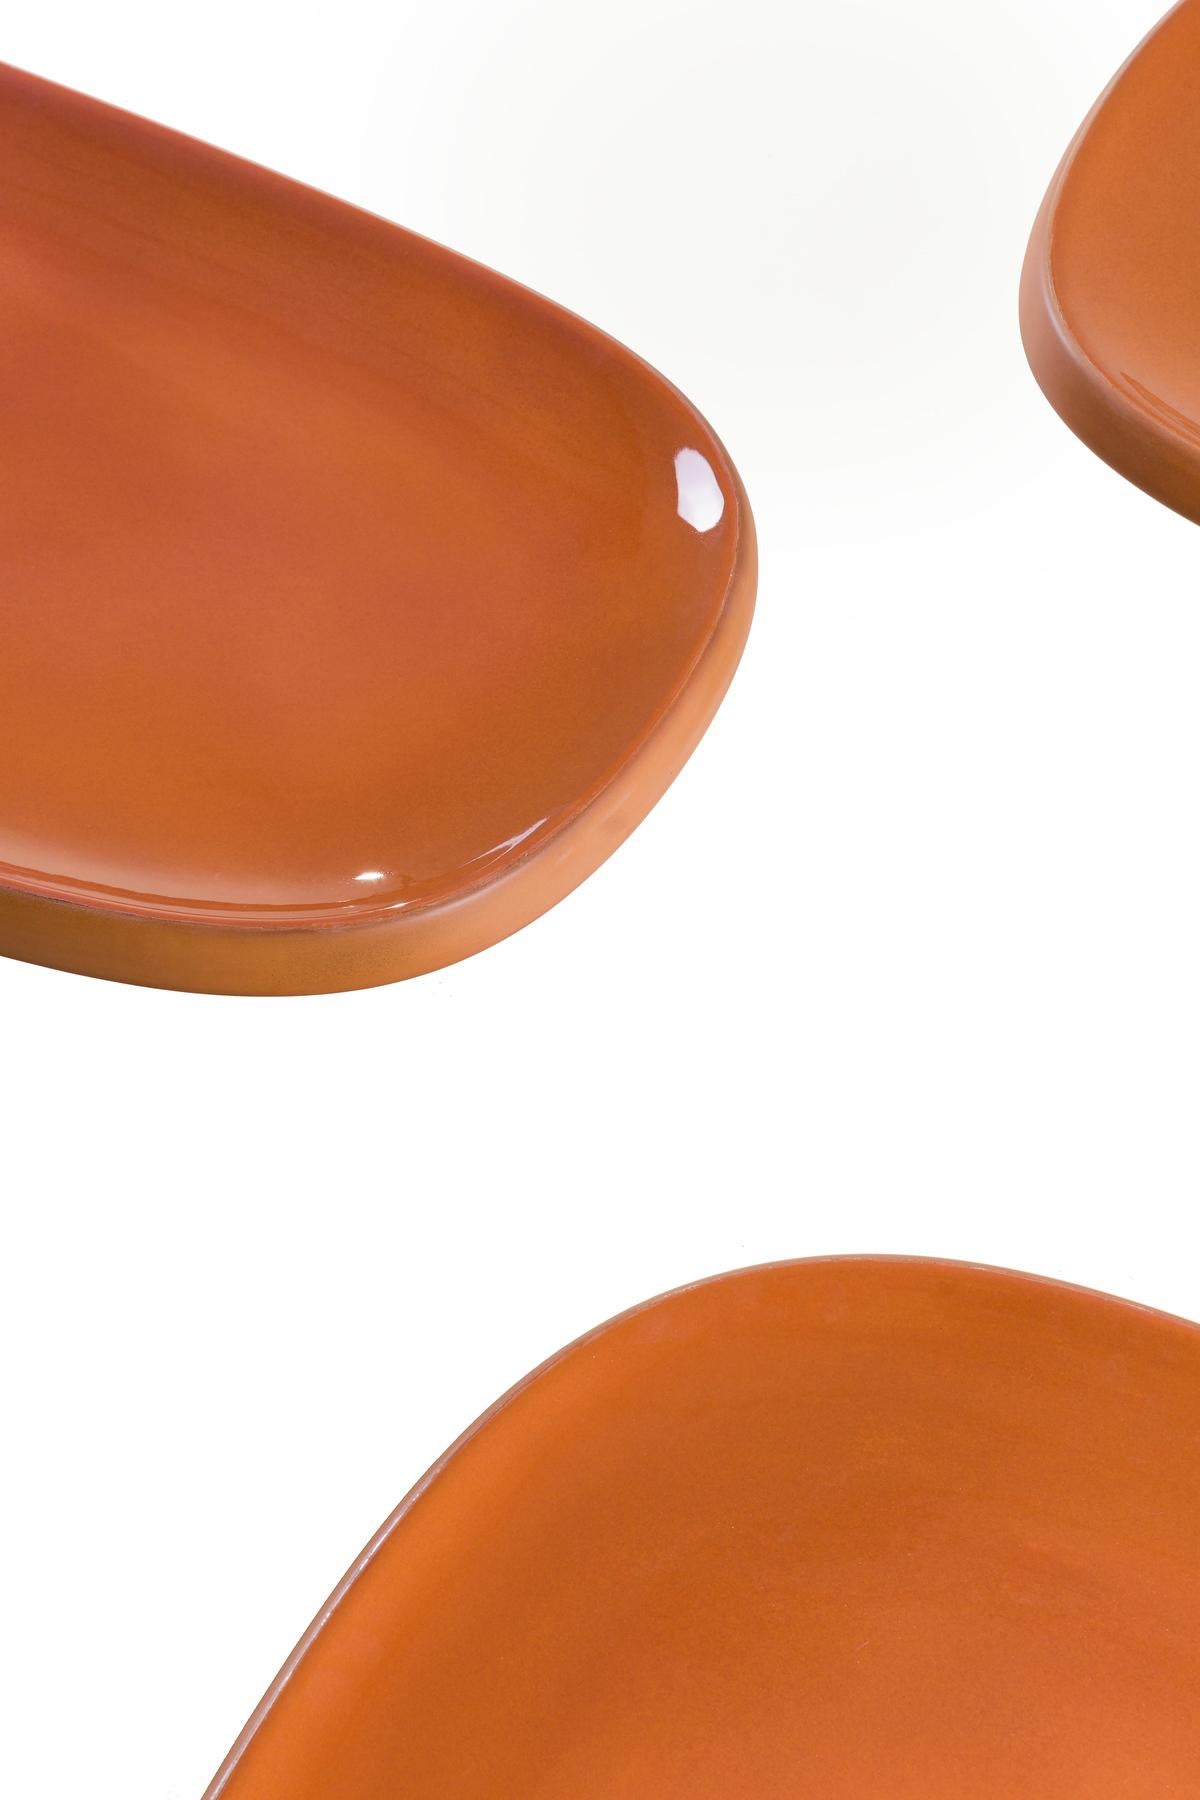 Dutch Moooi Obon Rectangular Low Ceramic Table in Terracotta Finish by Simone Bonanni For Sale